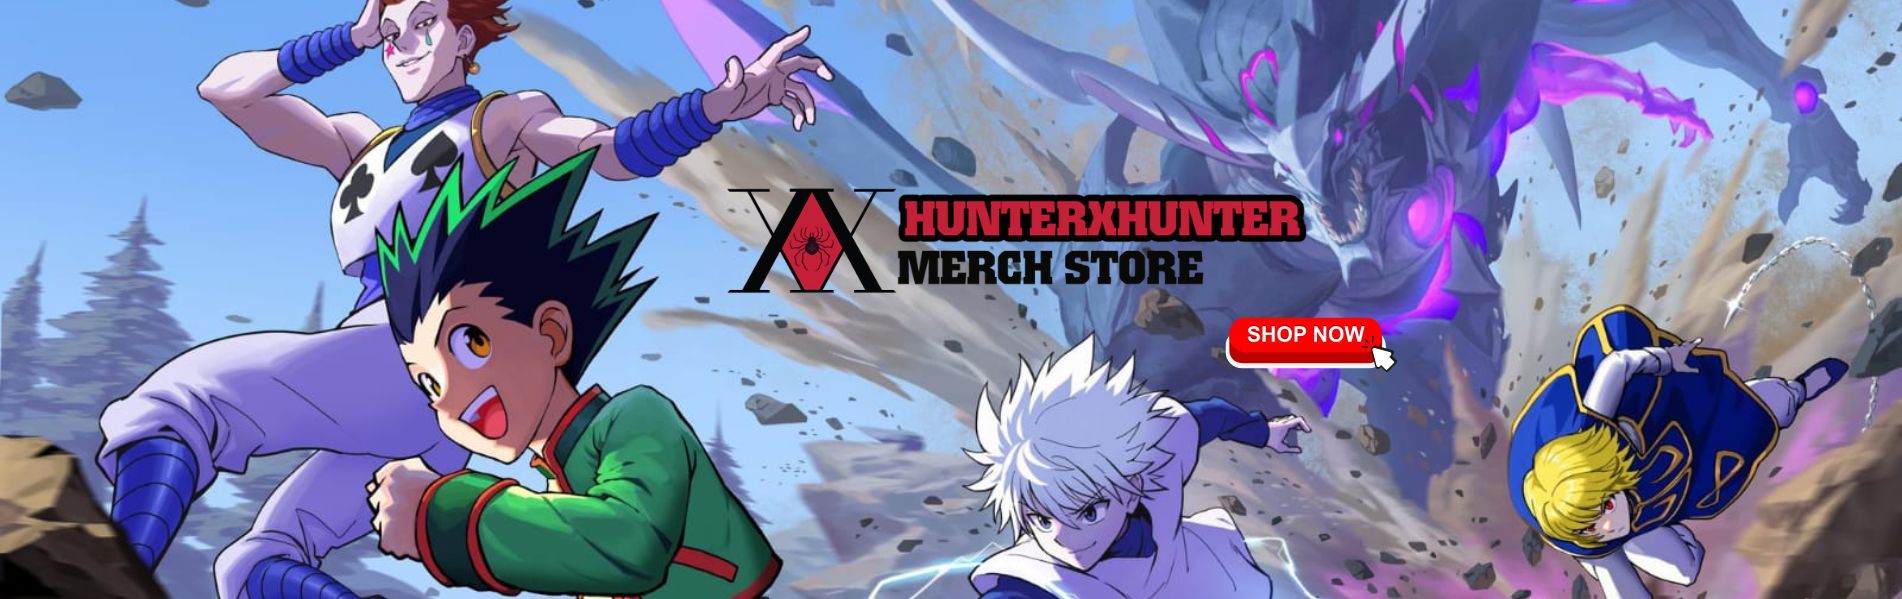 HunterxHunter Merch Banner - Hunter X Hunter Store